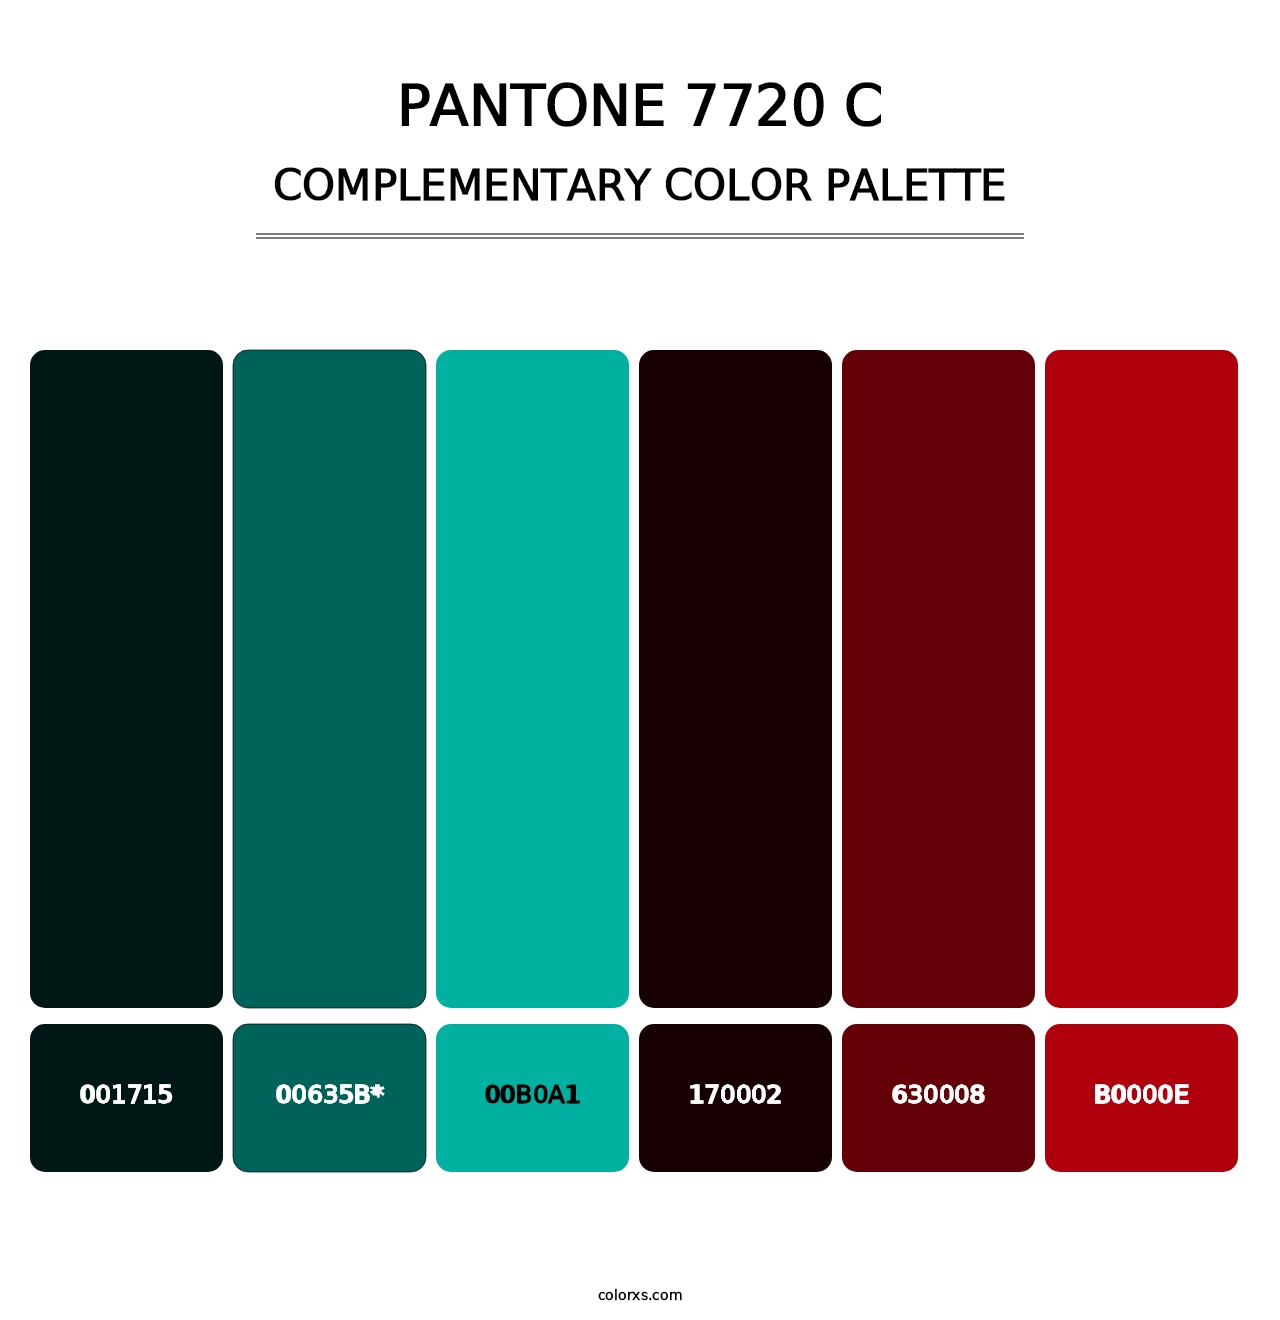 PANTONE 7720 C - Complementary Color Palette